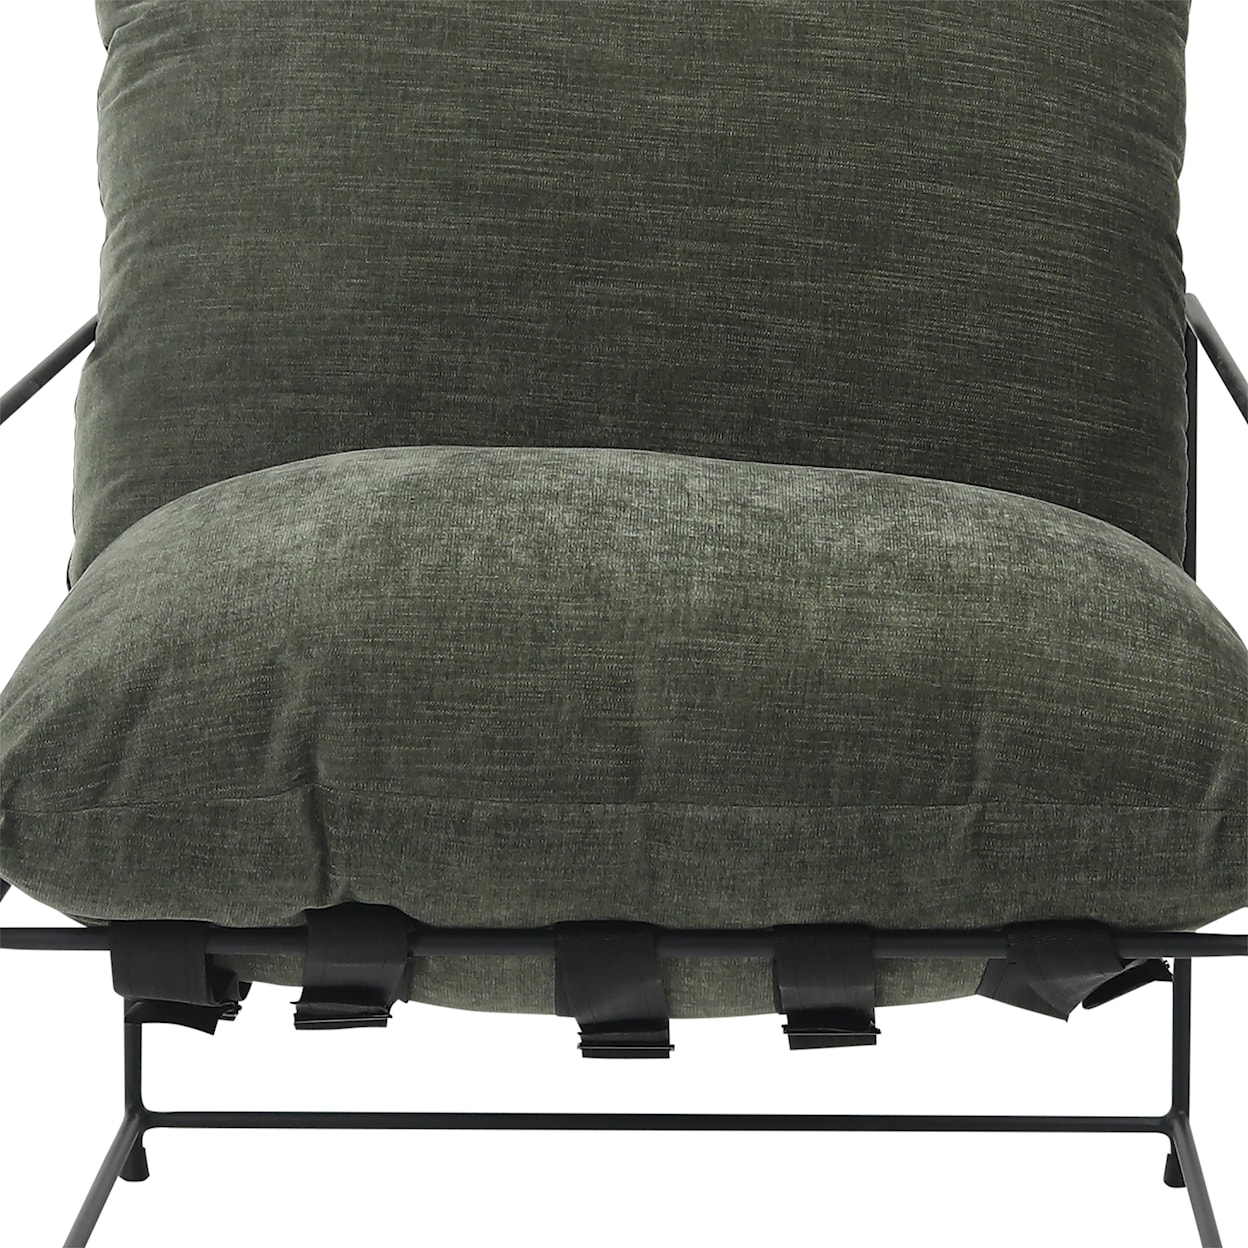 Dovetail Furniture Inska Chair 